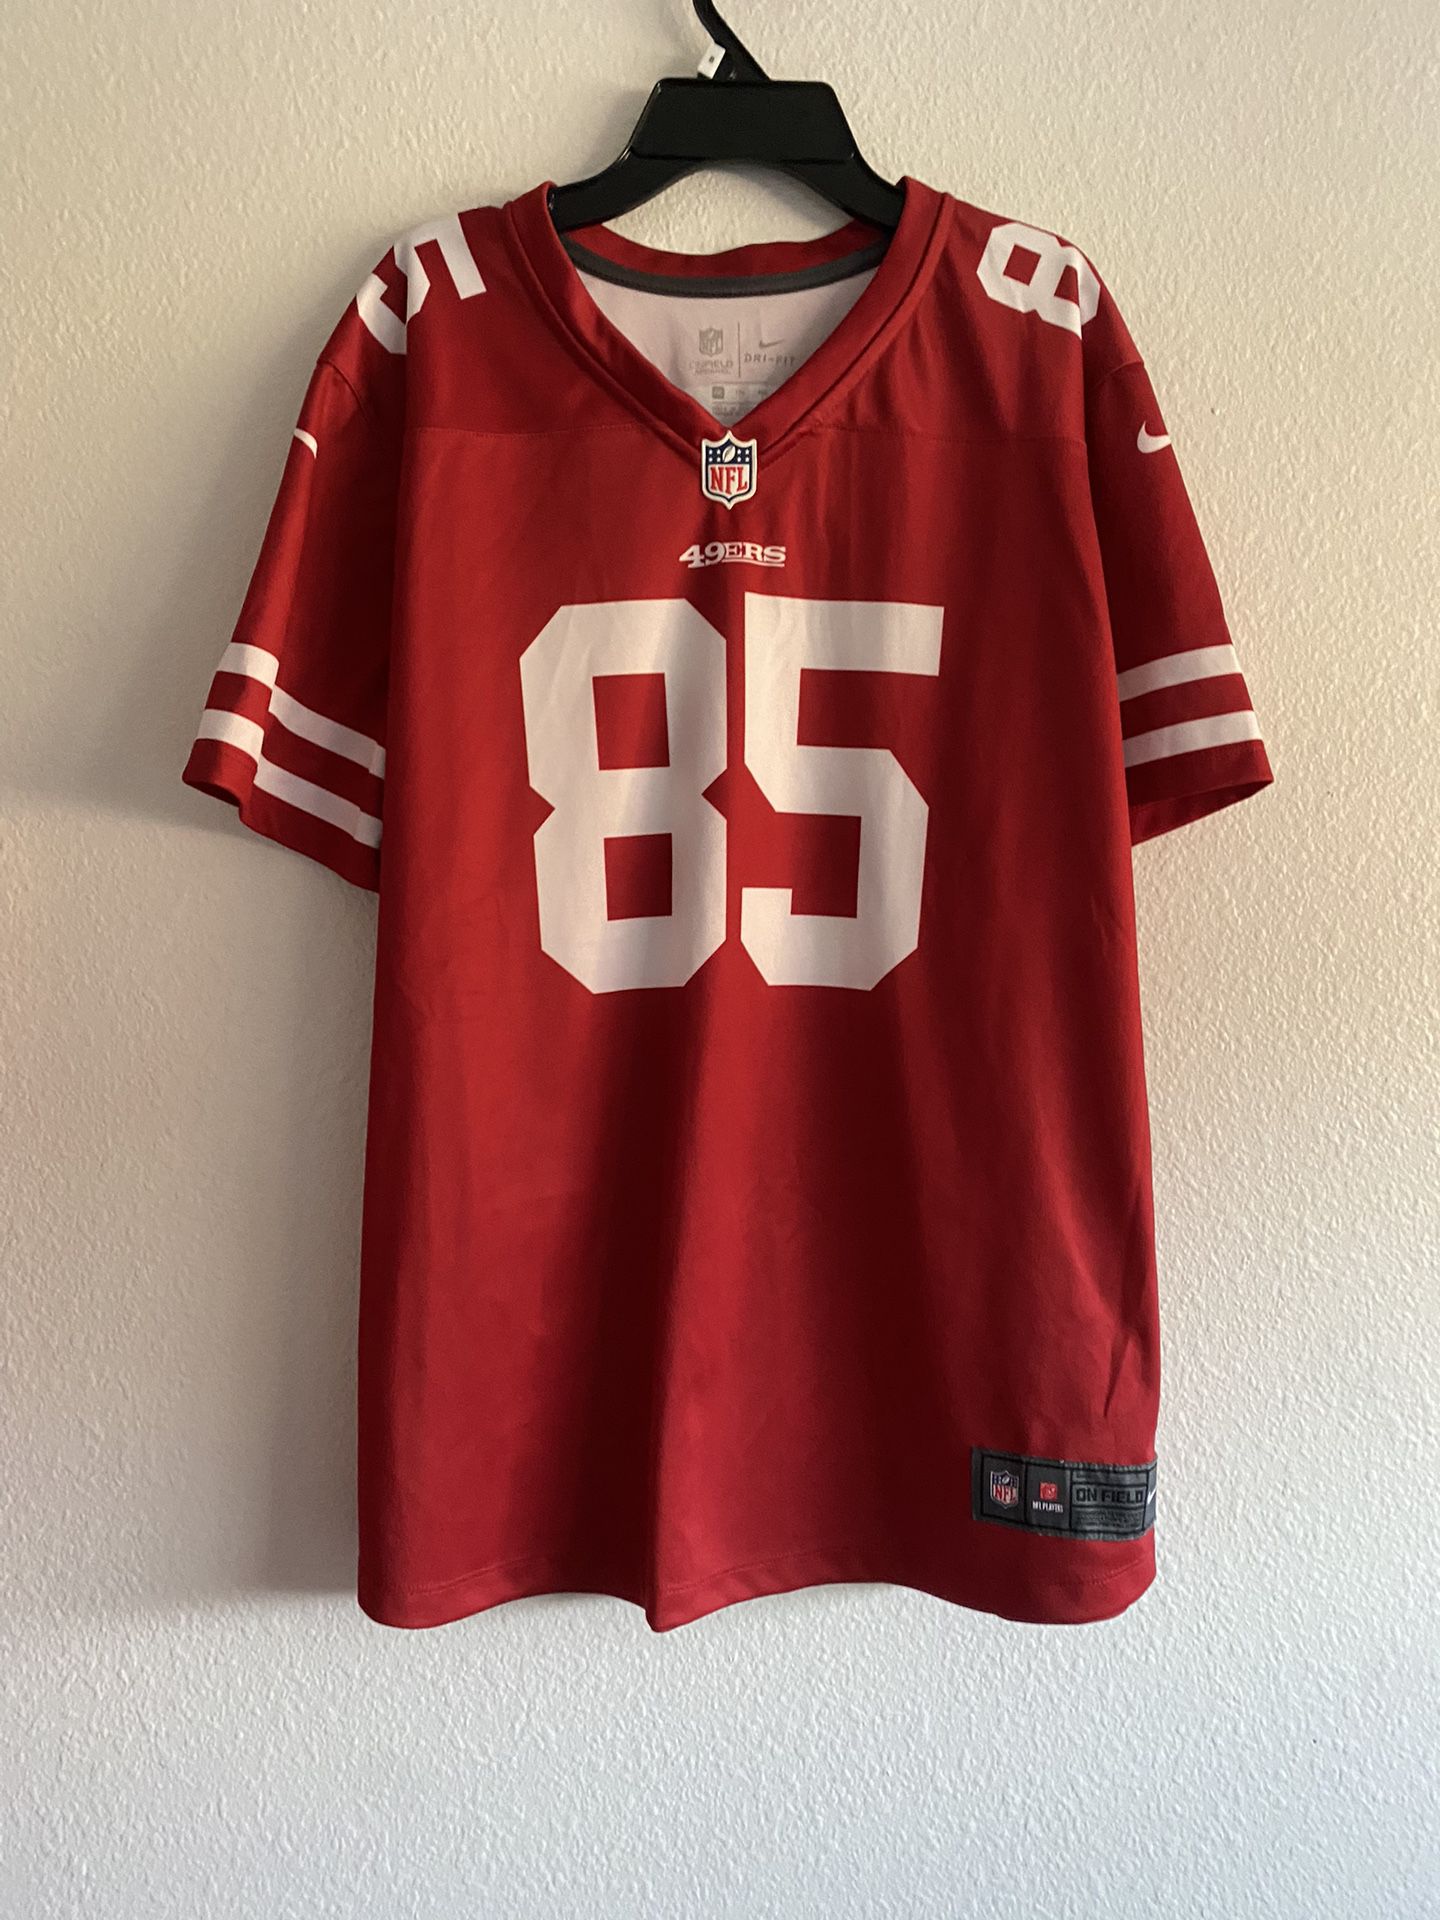 George Kittle #85 San Francisco 49ers Nike Dri-Fit NFL Red Jersey Men’s XXL